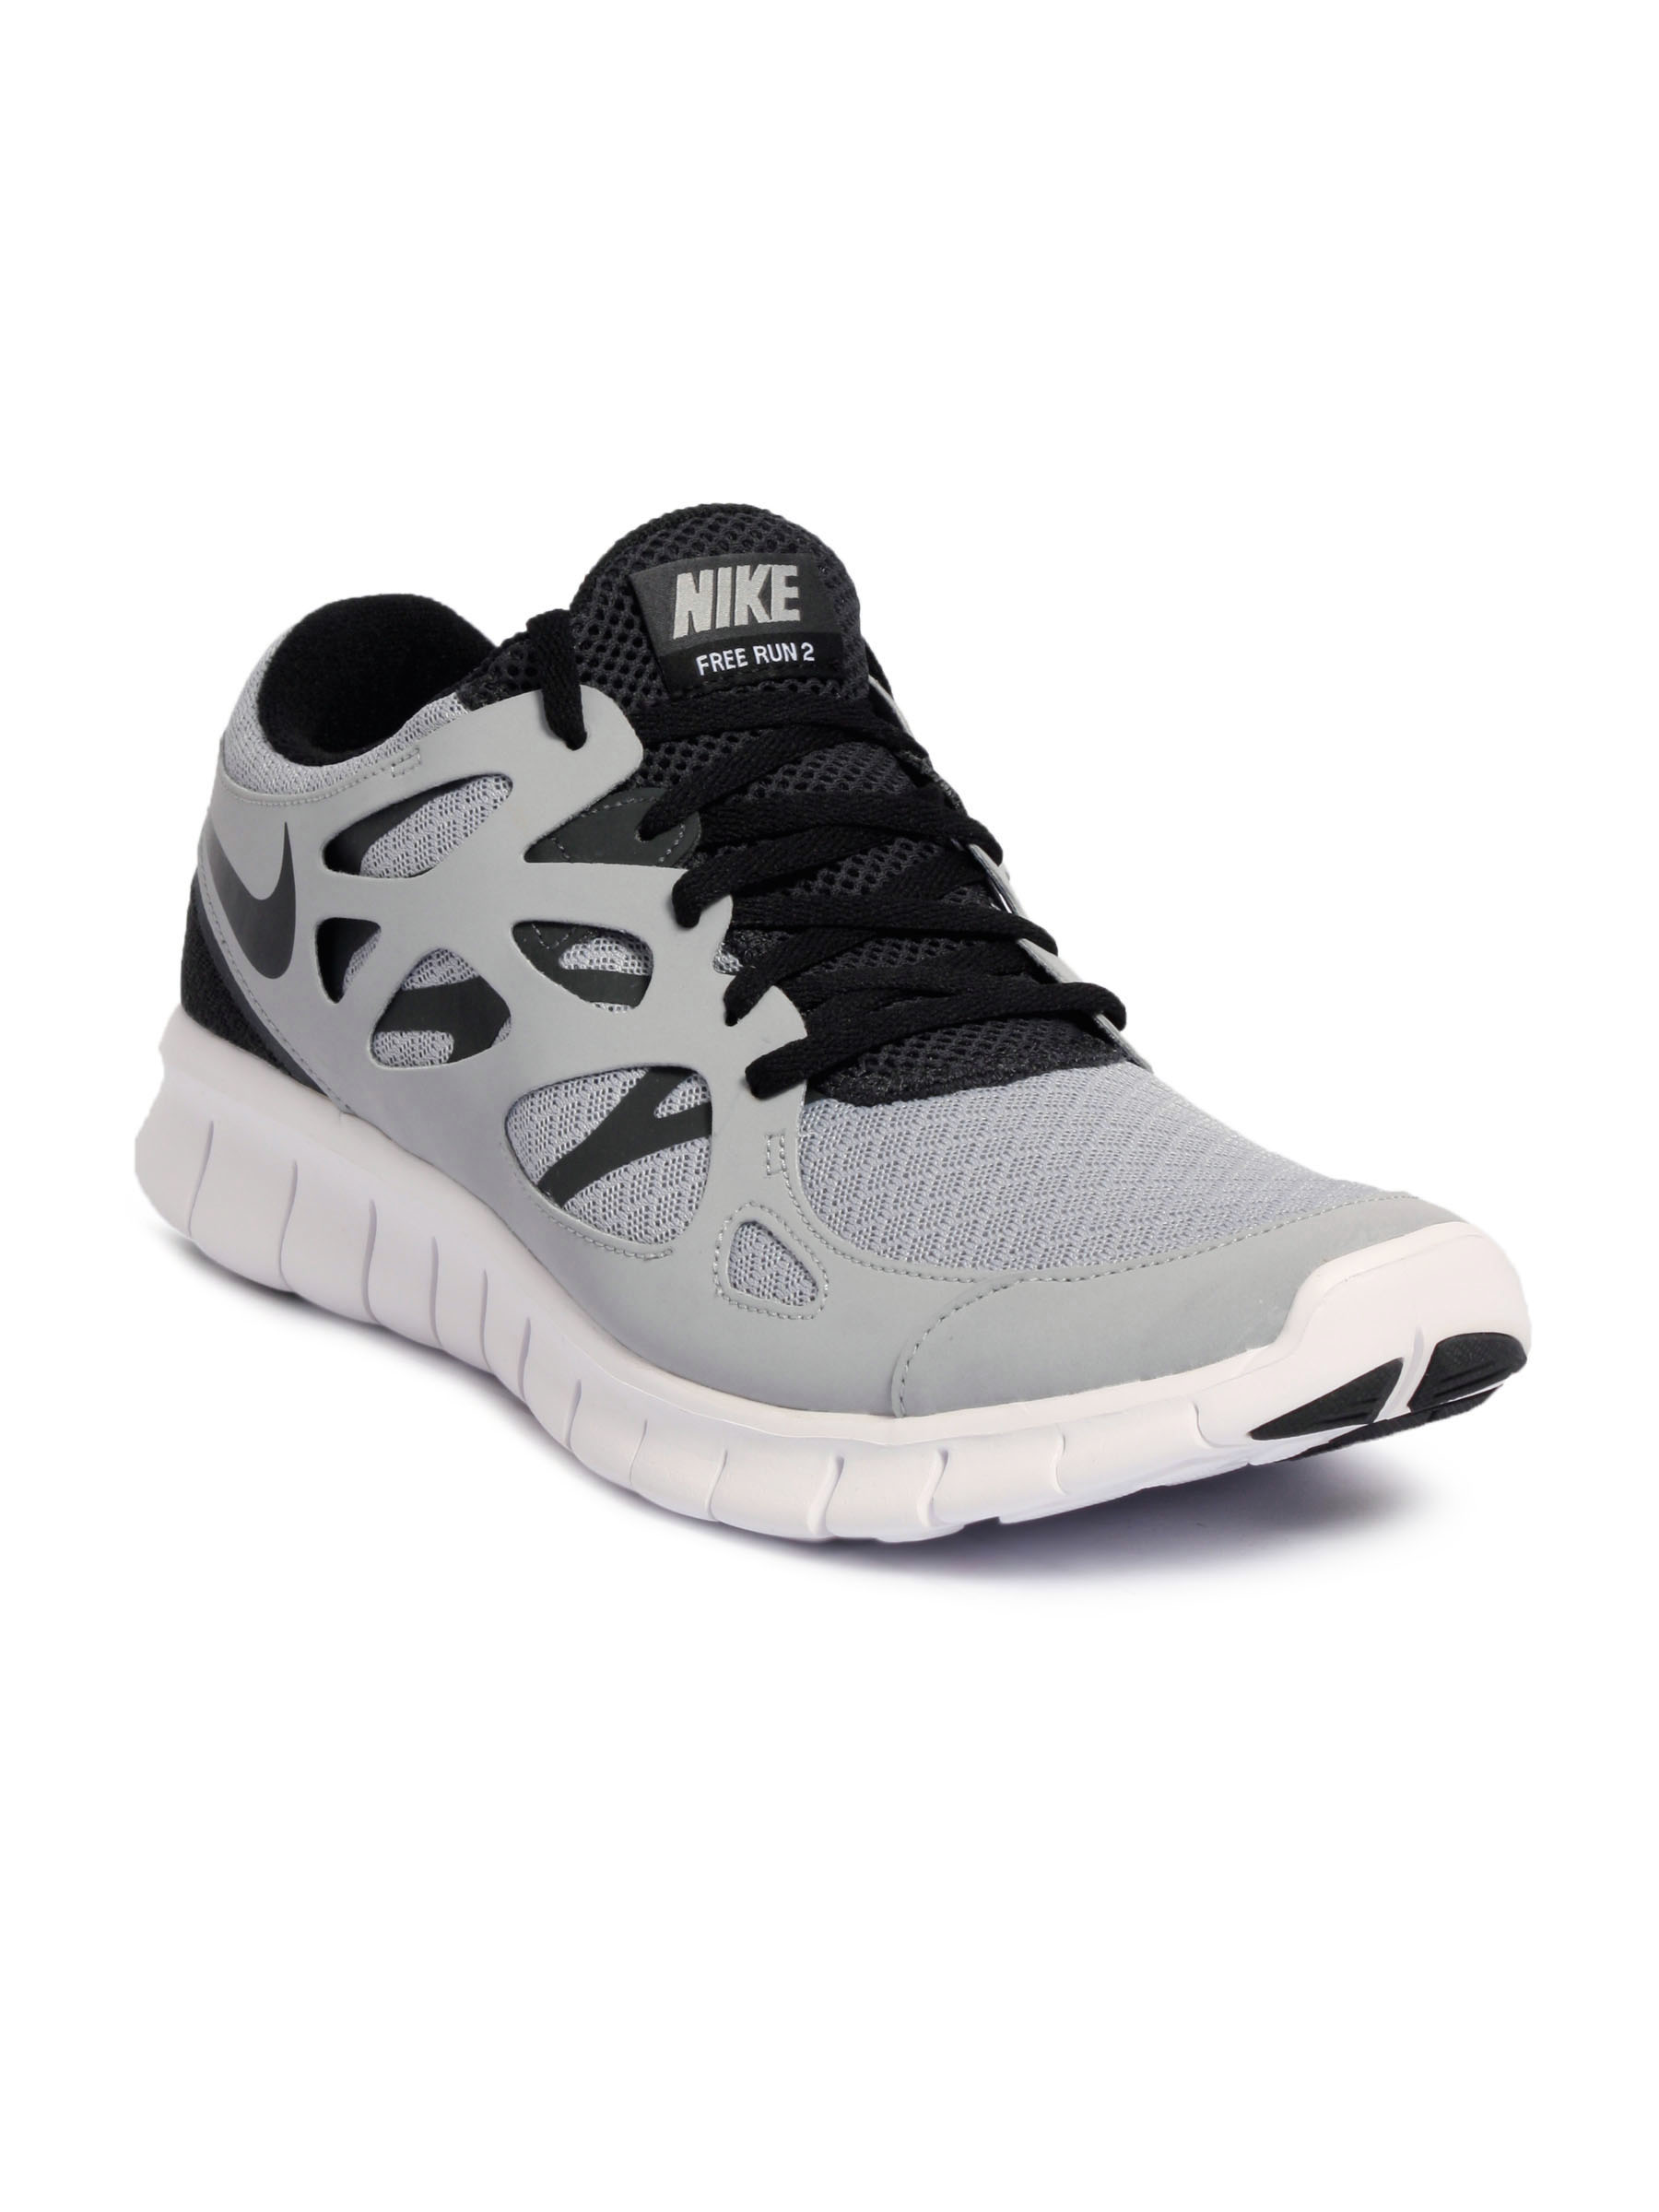 Nike Men Free Run +2 Grey Sports Shoes